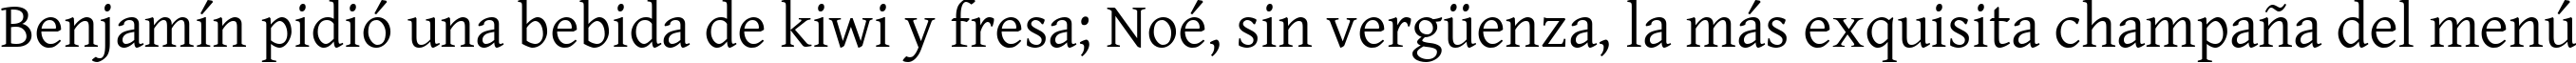 Пример написания шрифтом Gentium Basic текста на испанском